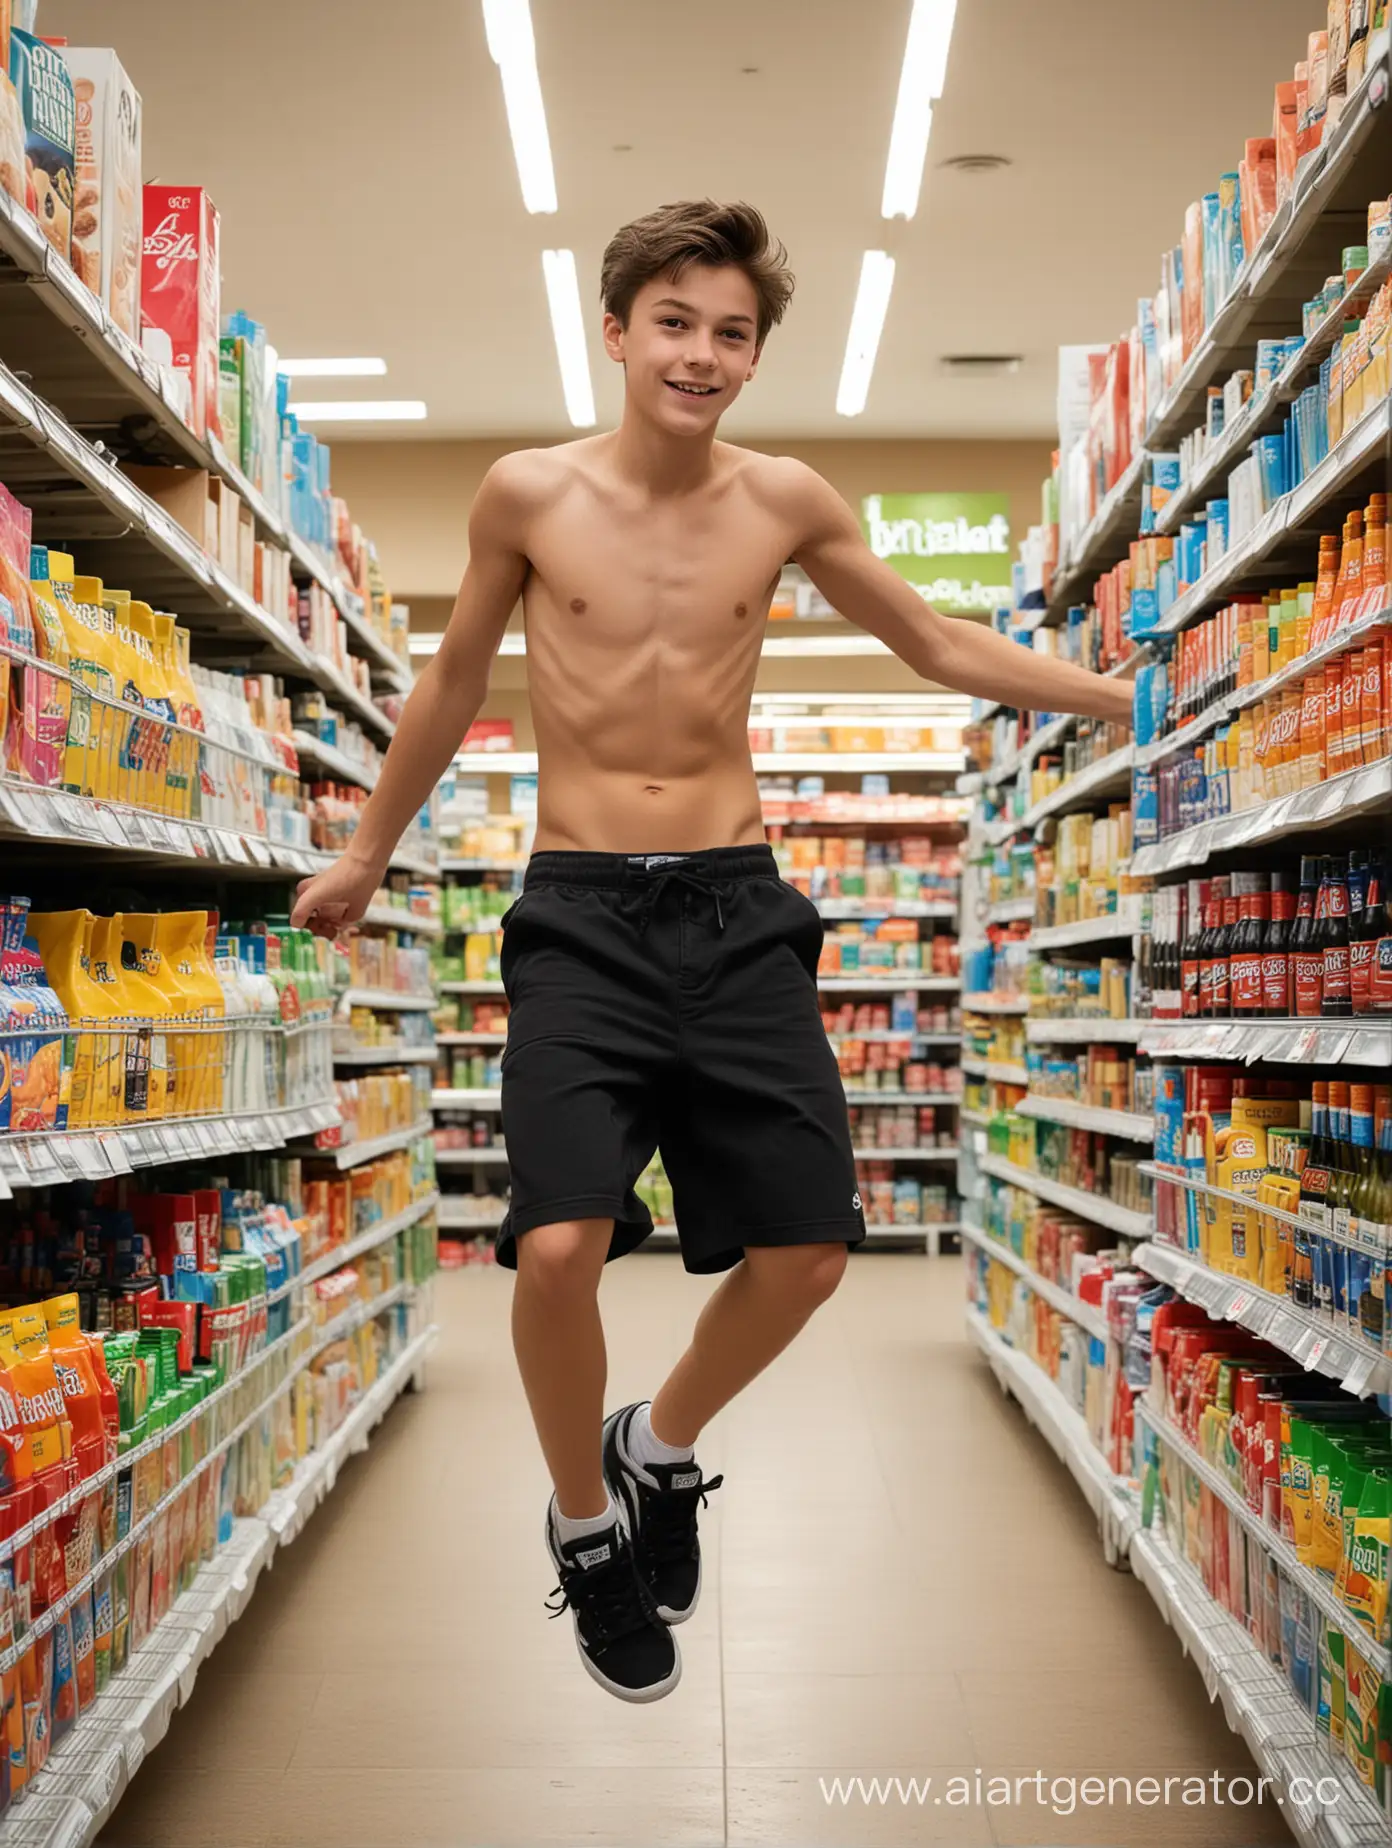 Teen-Boy-Performing-Flip-in-Busy-Supermarket